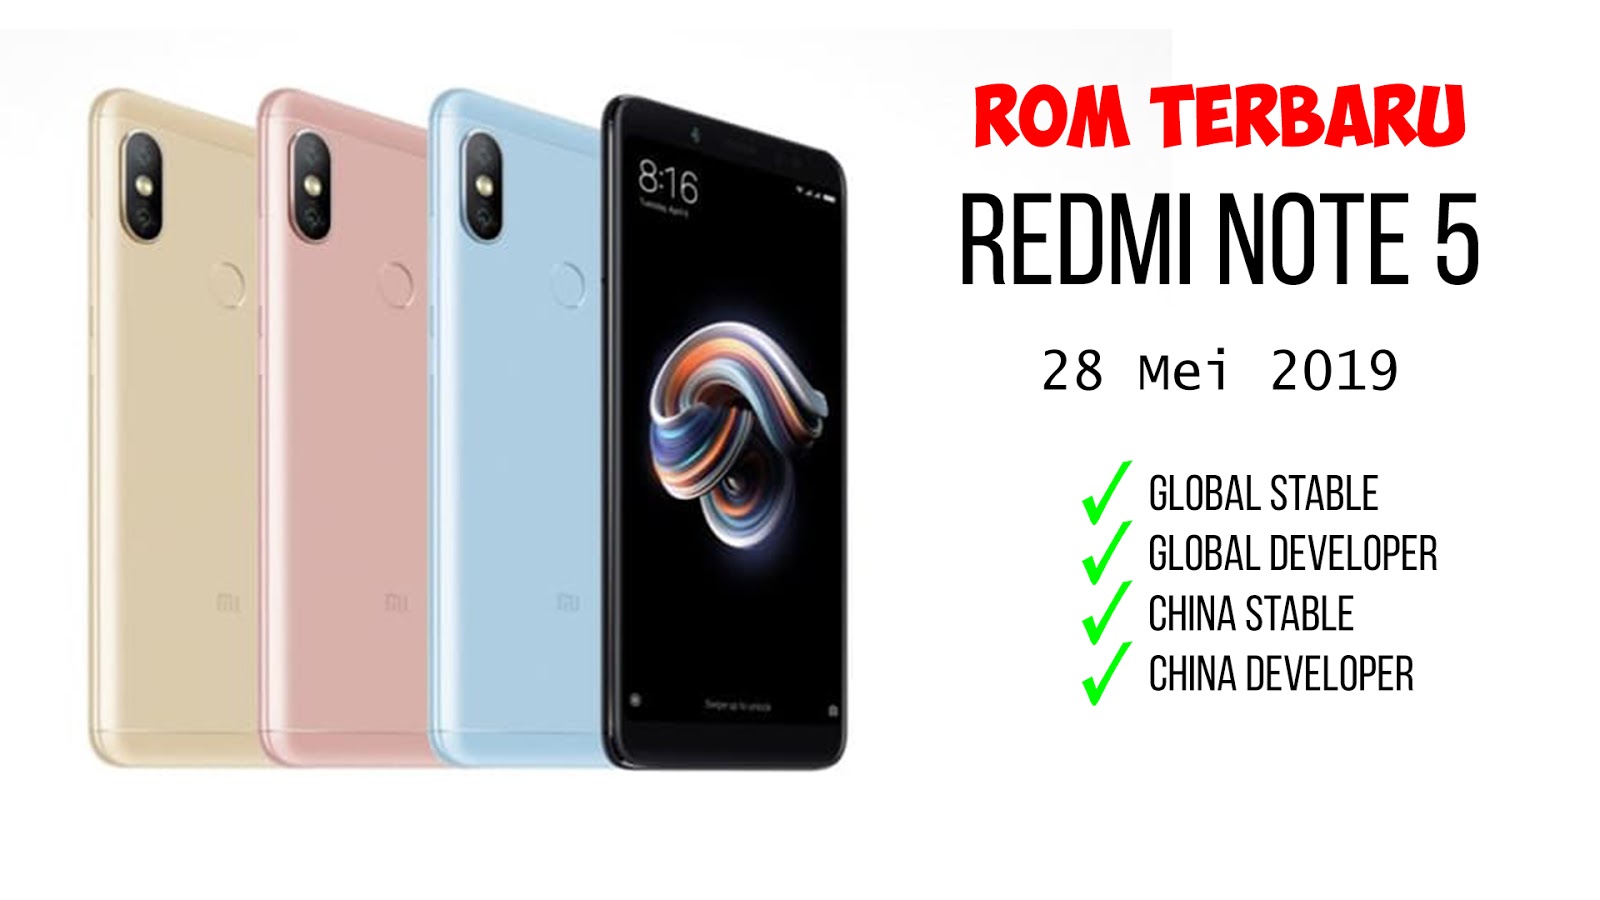 Xiaomi Redmi Note 5 Pro 4/64gb. Редми ноте 5 а Глобал Голд версион.